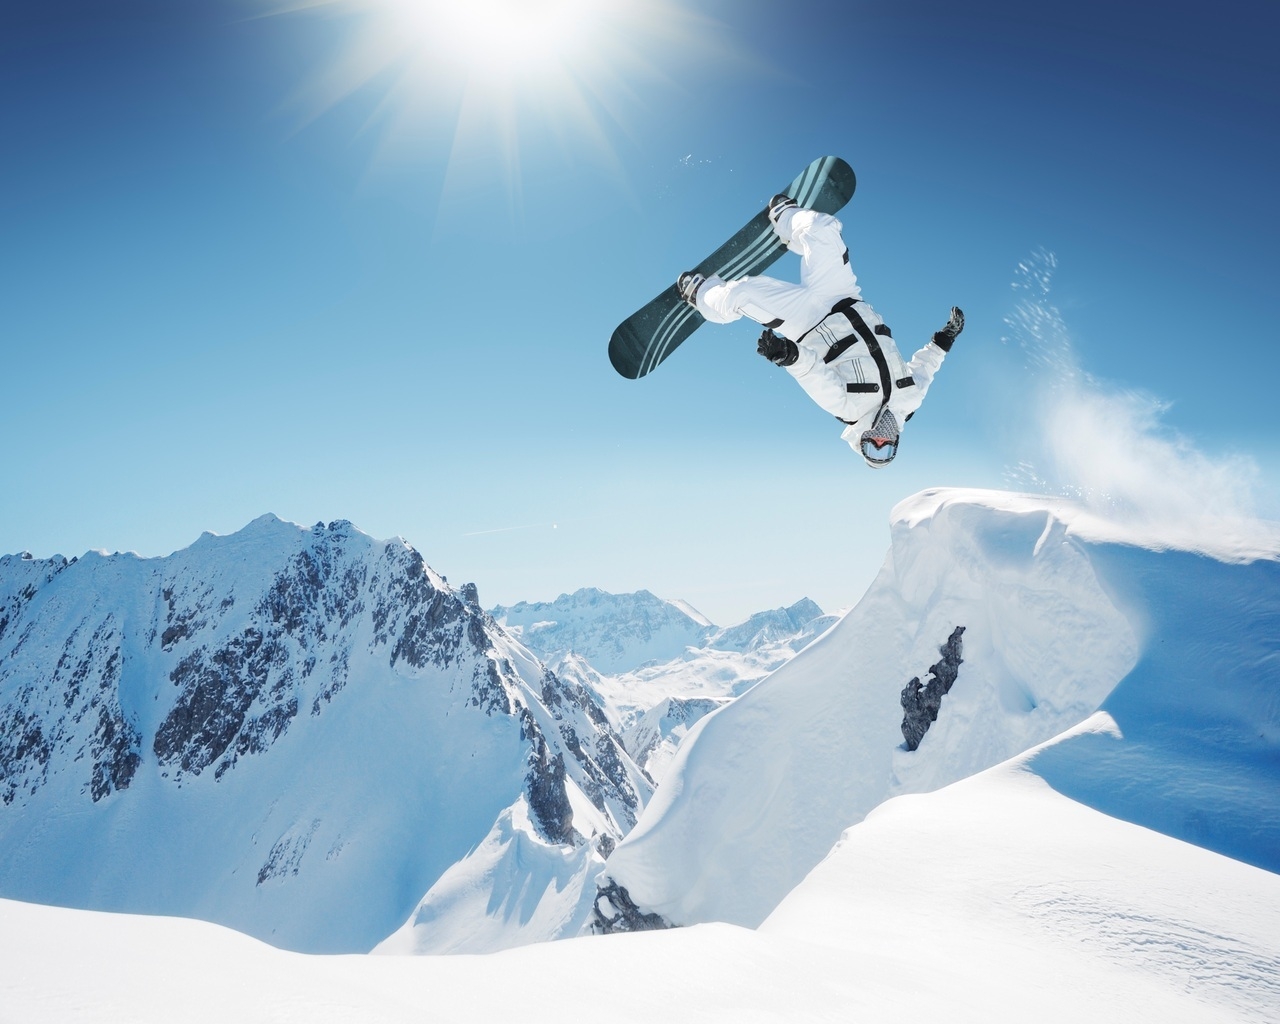 Snowboarding Adventure for 1280 x 1024 resolution